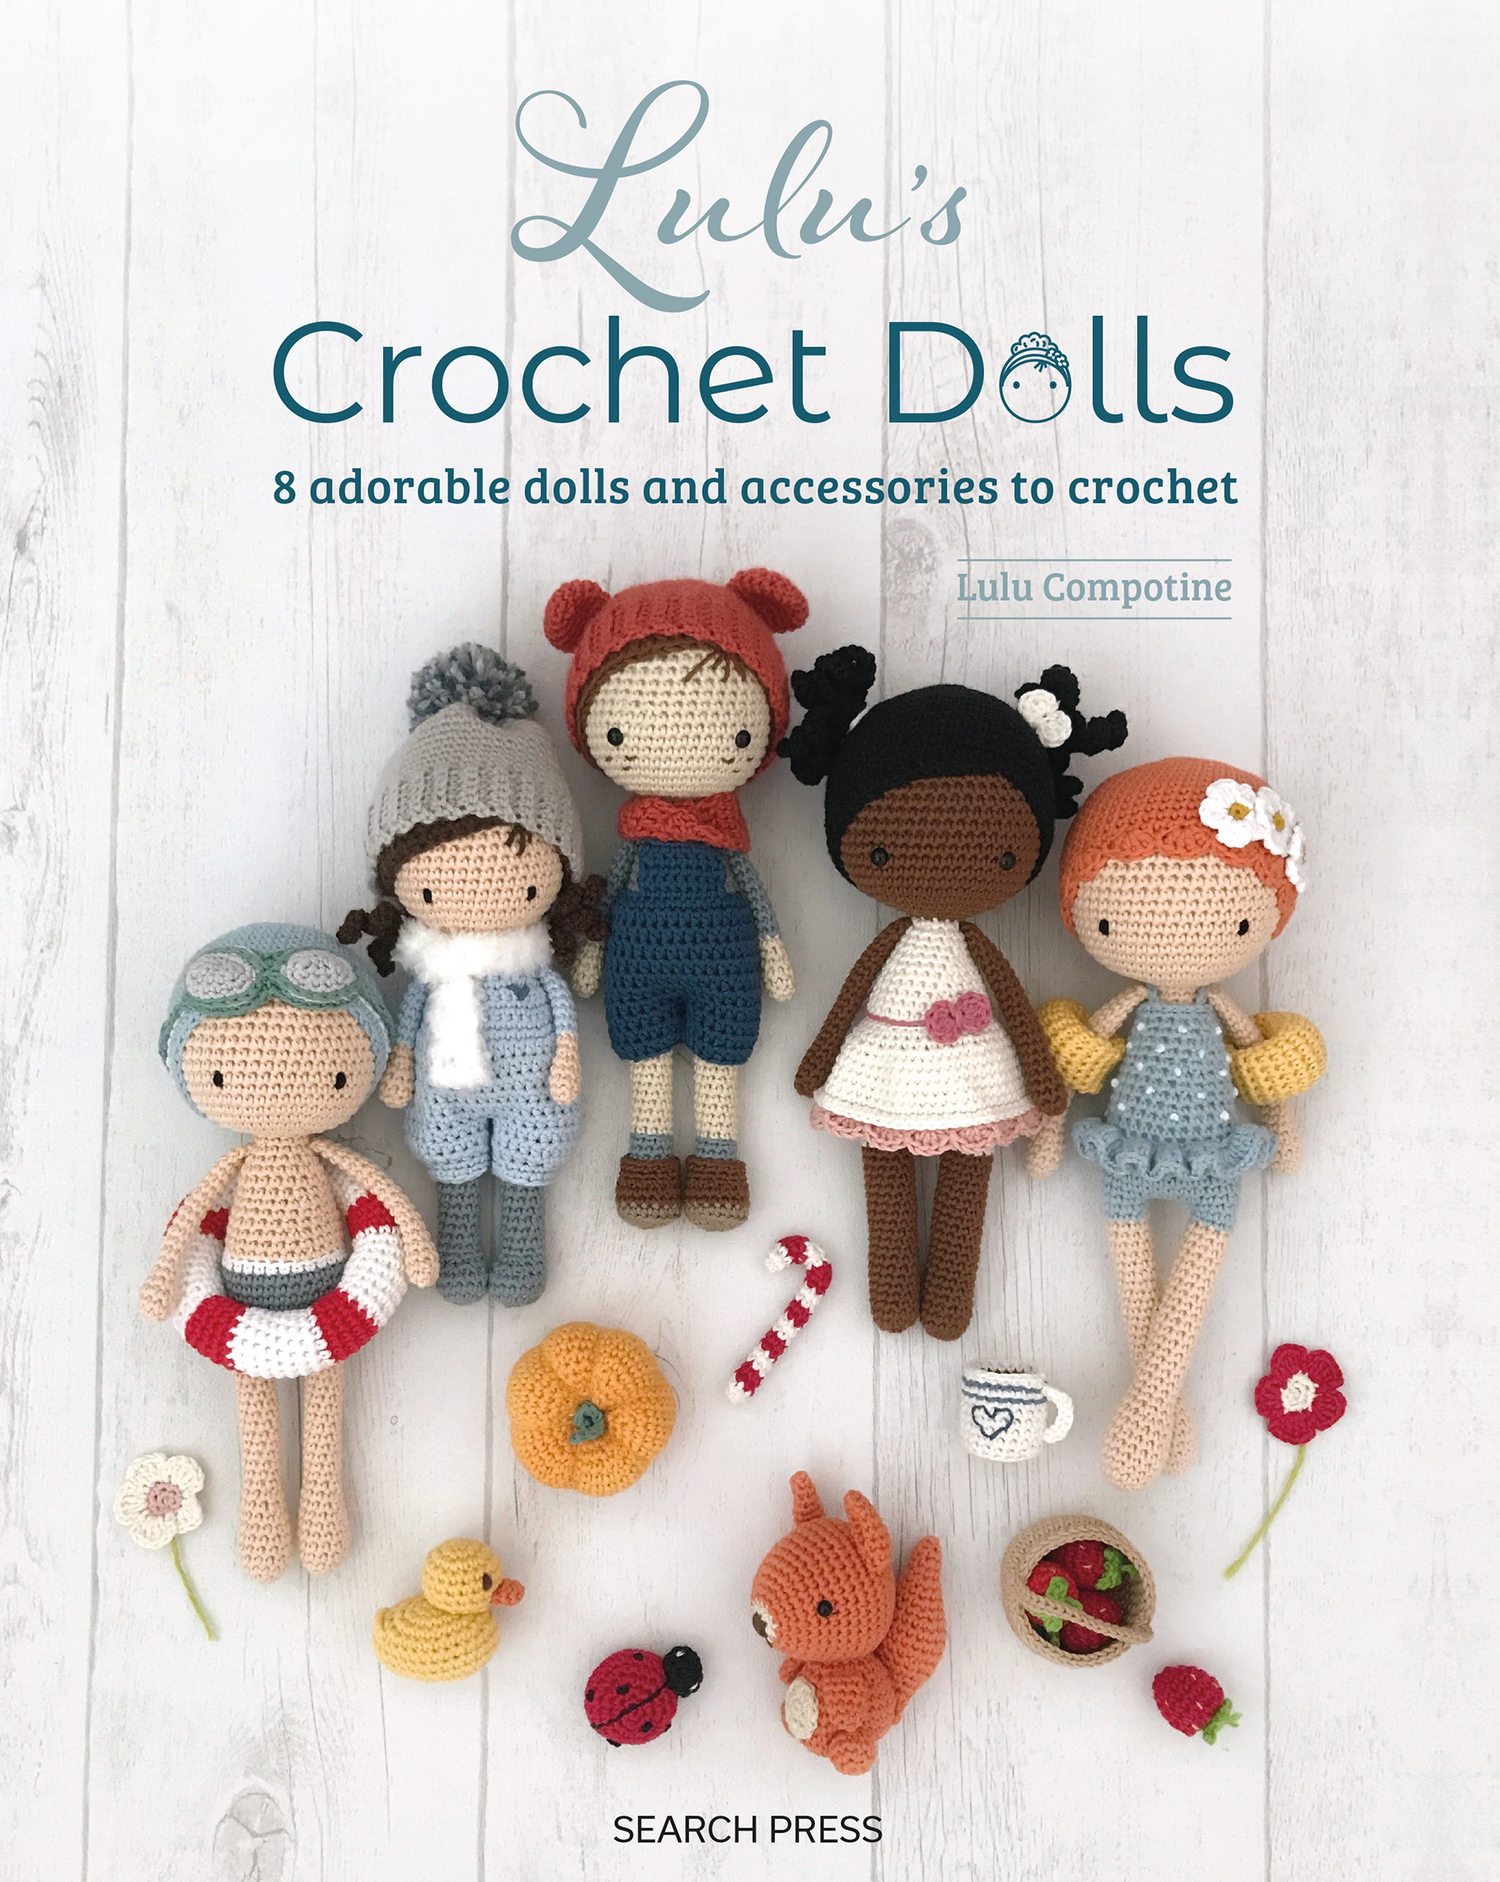 Adorable Crochet dolls in seasonal outfits